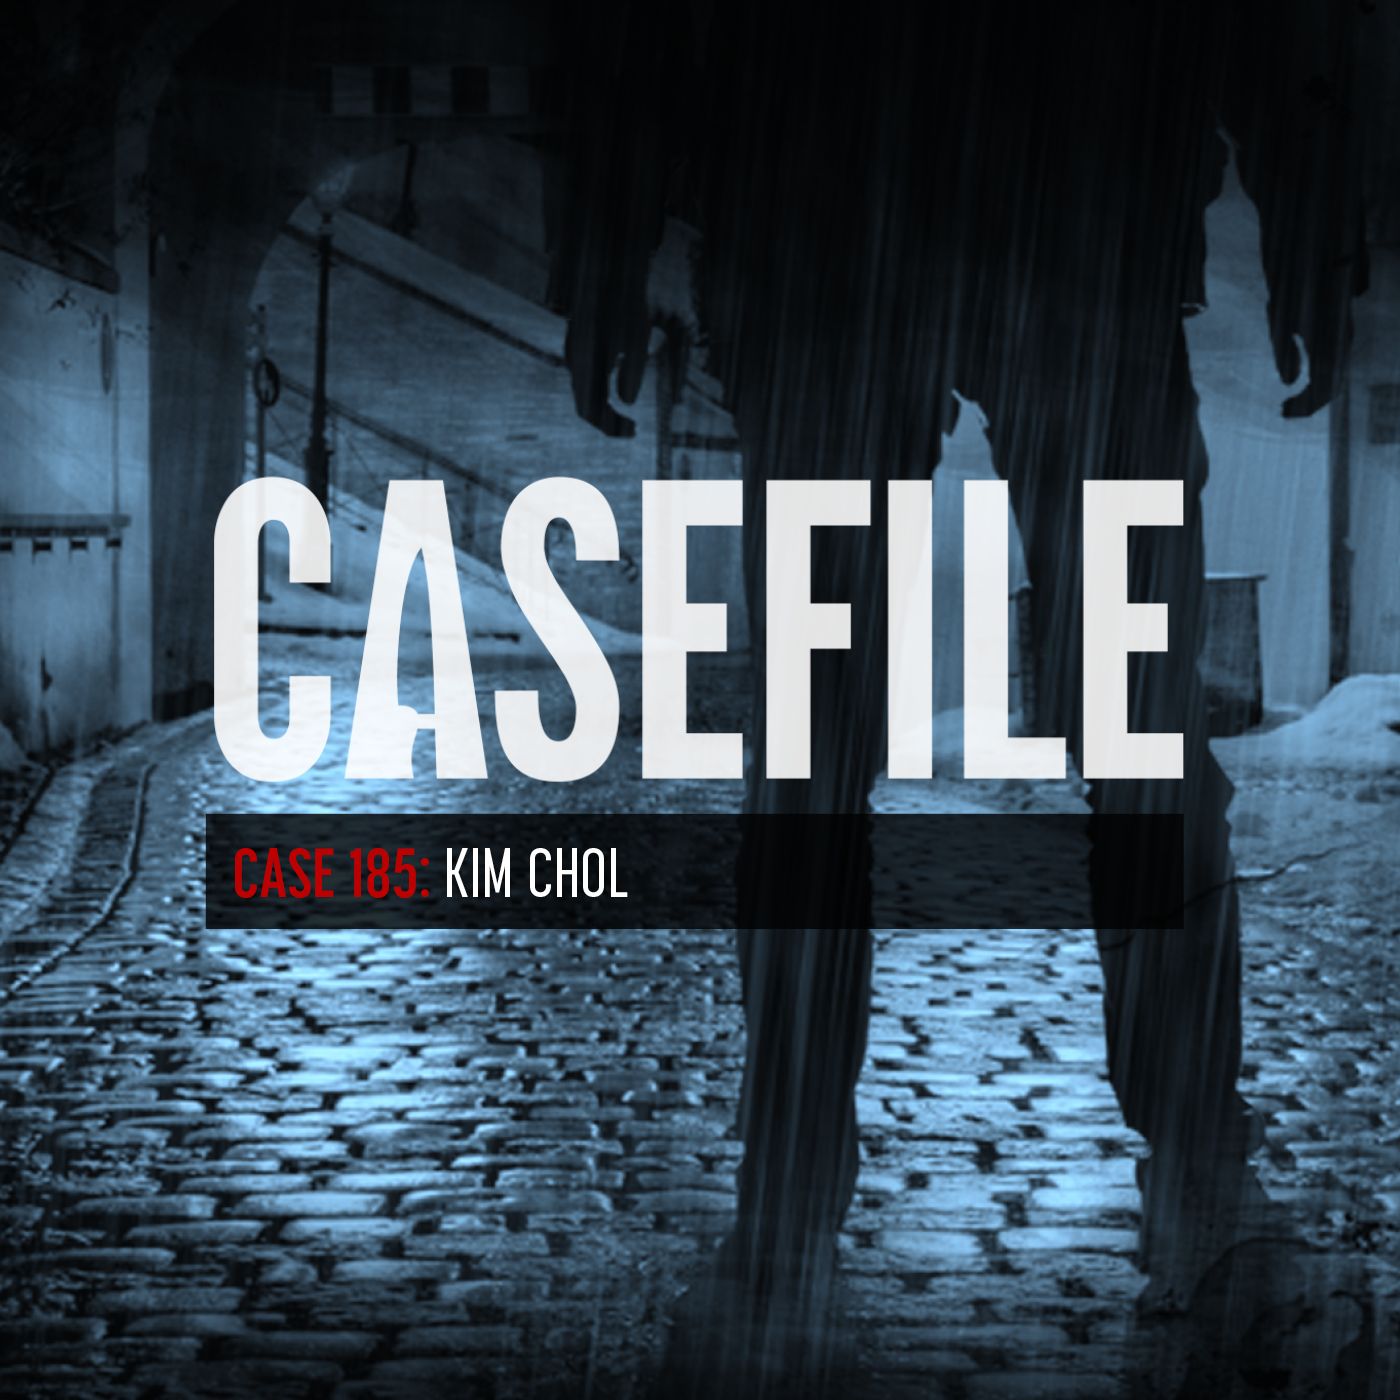 Case 185: Kim Chol